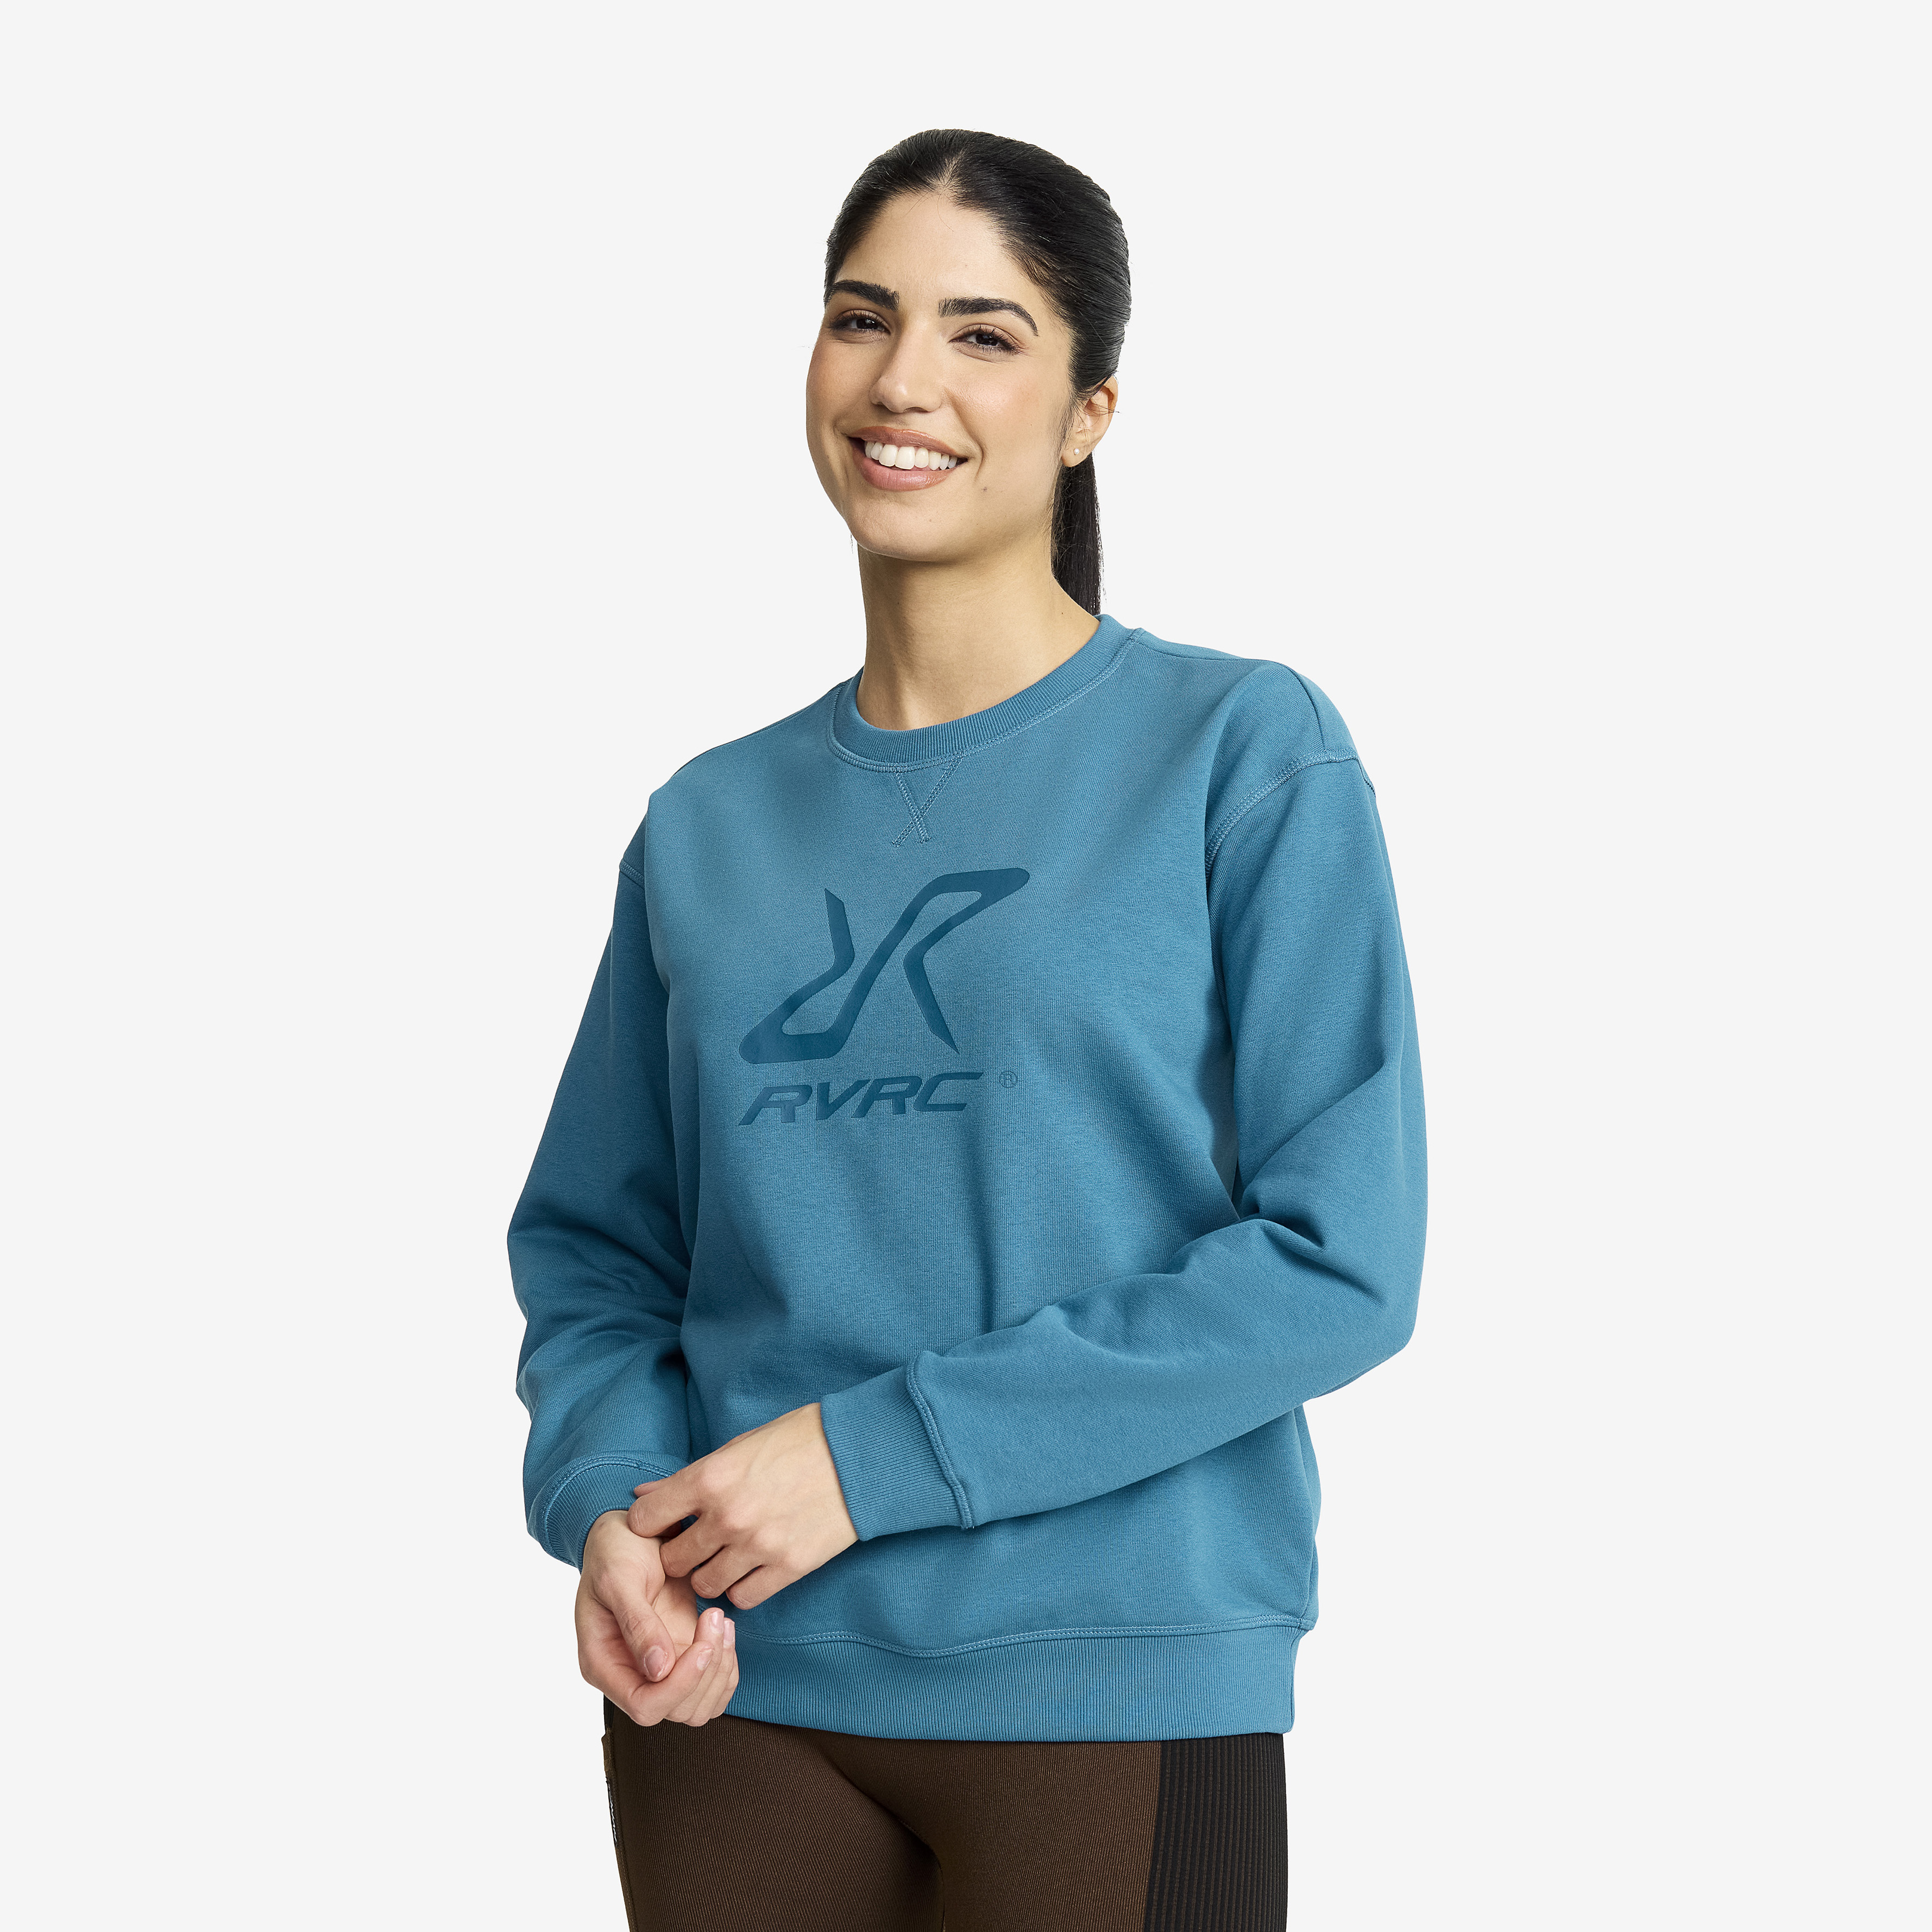 RVRC Sweatshirt Saxony Blue Damen